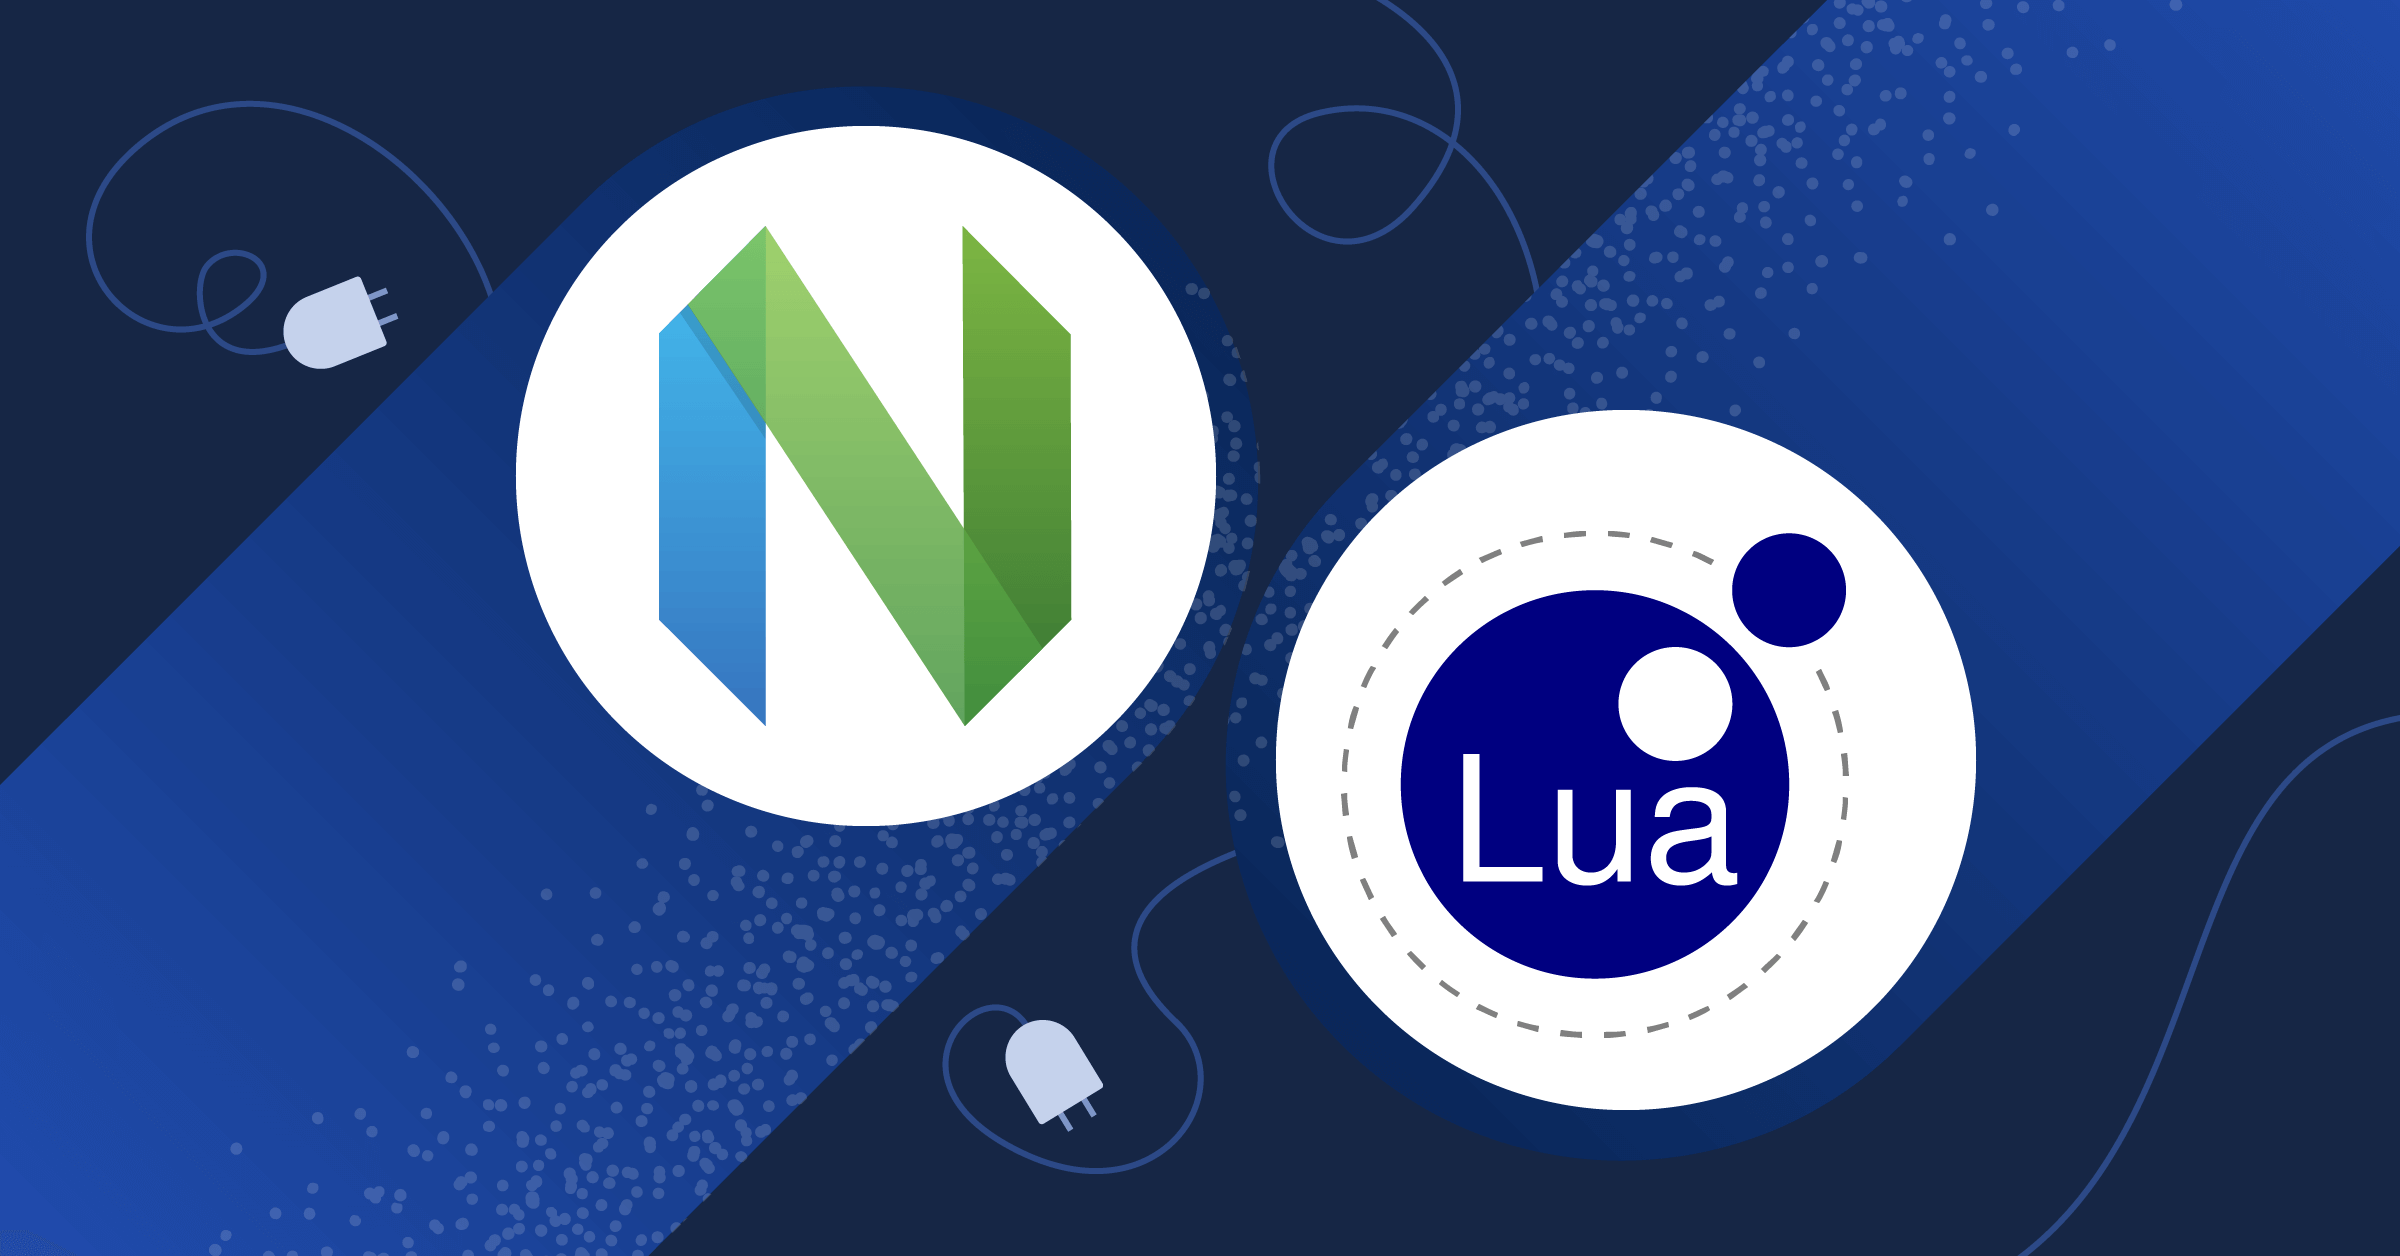 Neovim and Lua